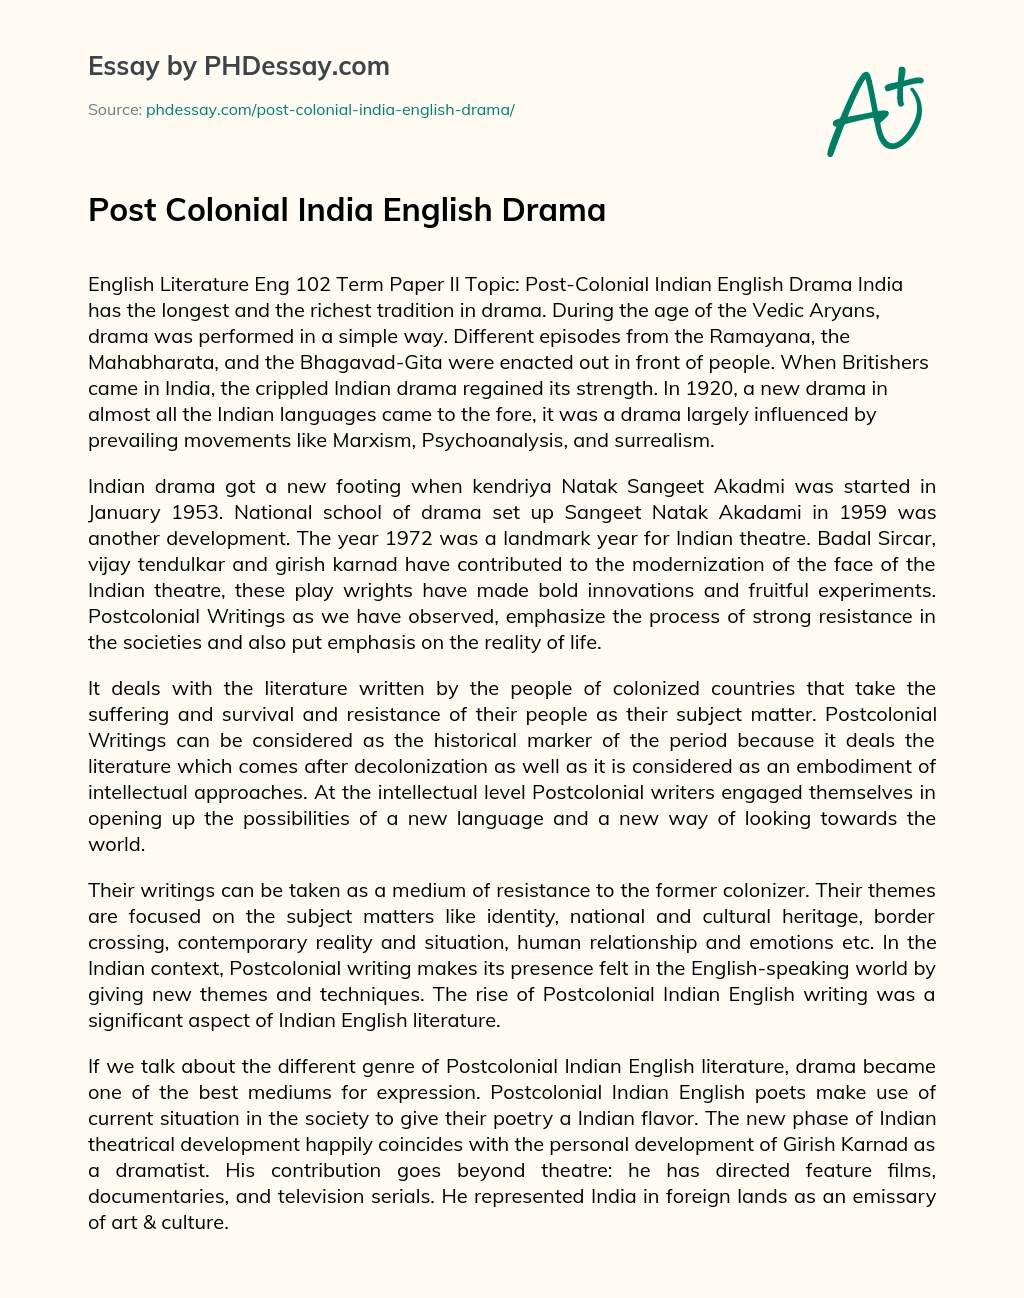 Post Colonial India English Drama essay